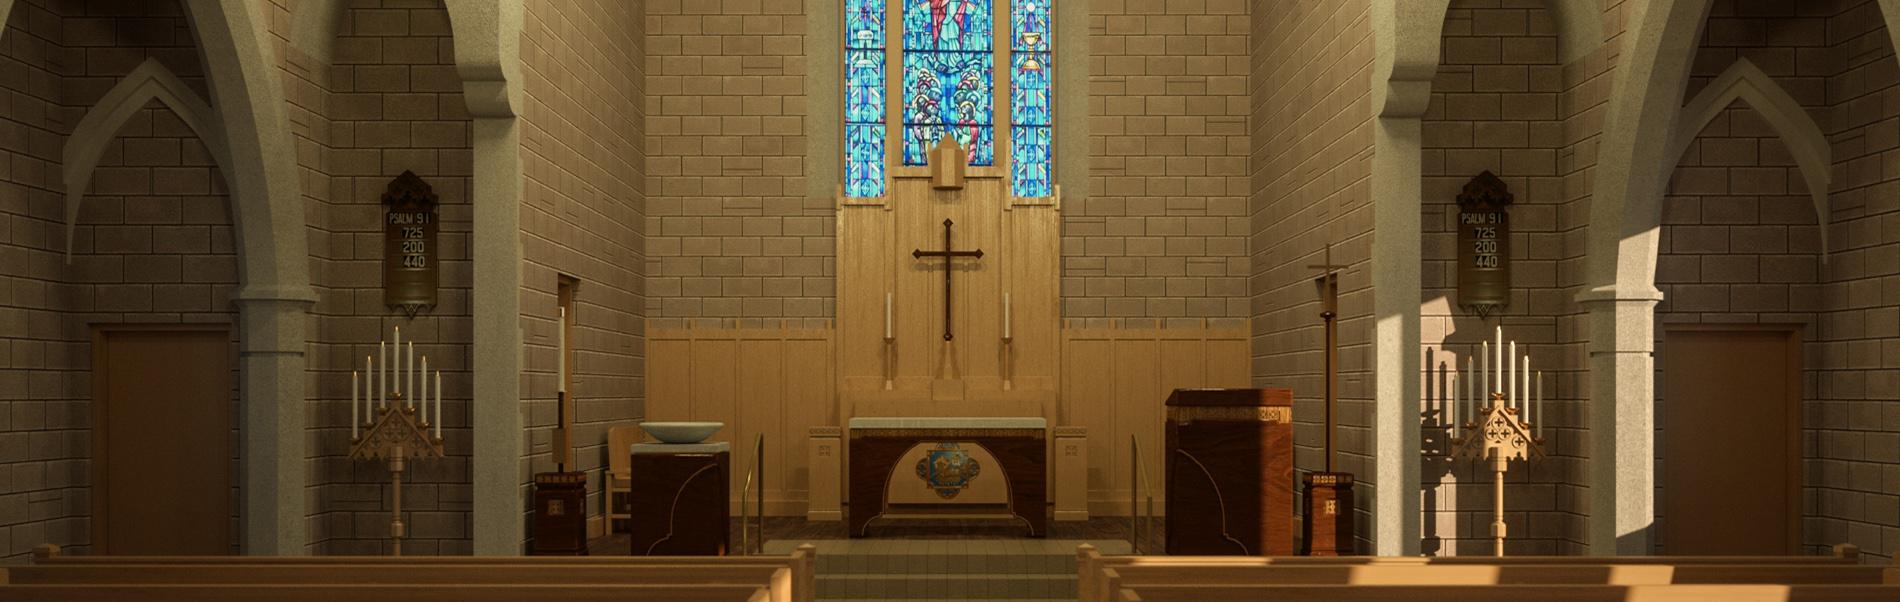 church rendering